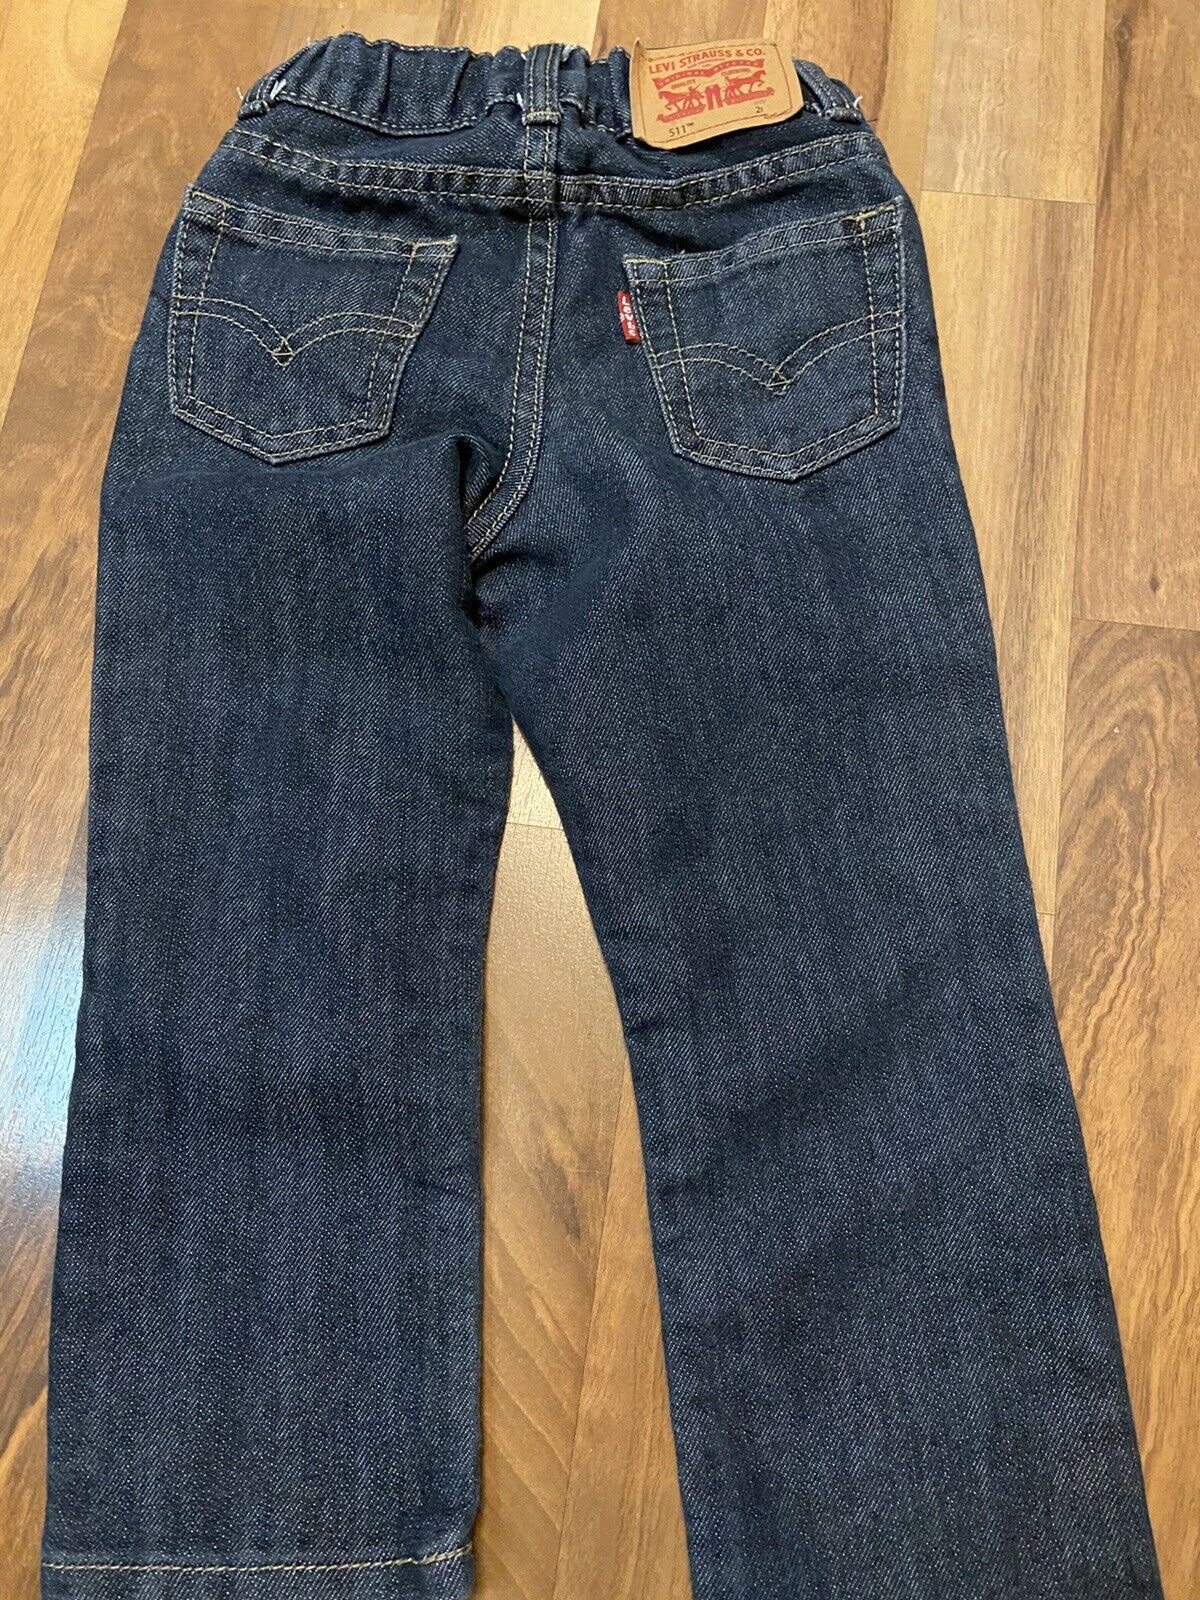 Euc Levi’s 511 Slim Jeans Boys Size 2t Adjustable Waist